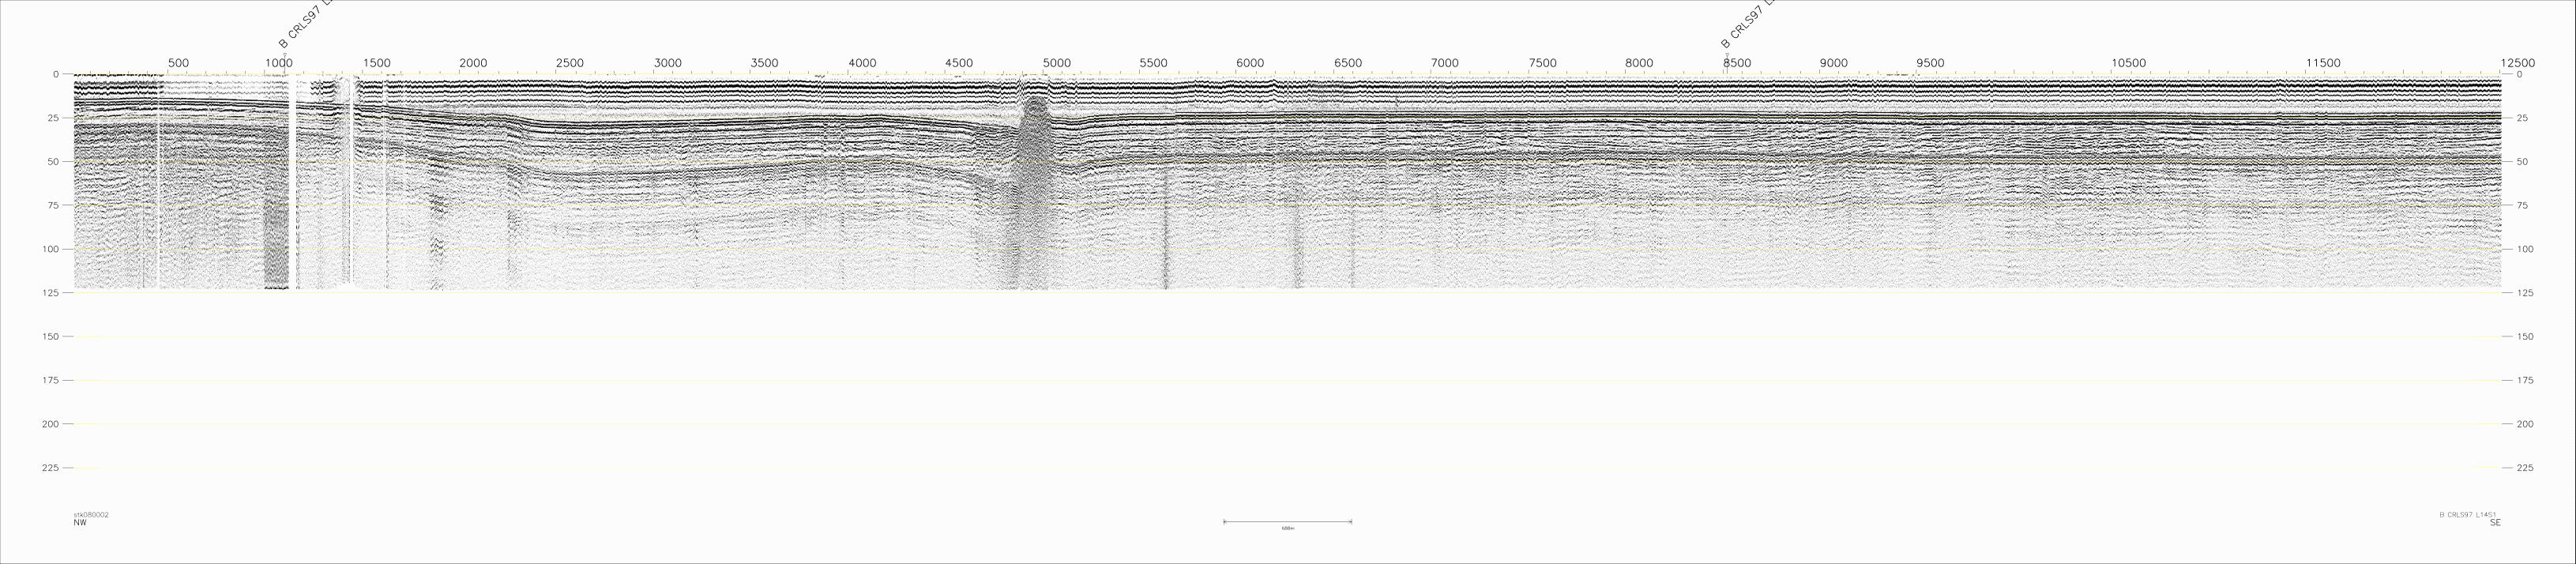 Seismic Reflection Profile Line No.: L14s1a (419206 bytes)